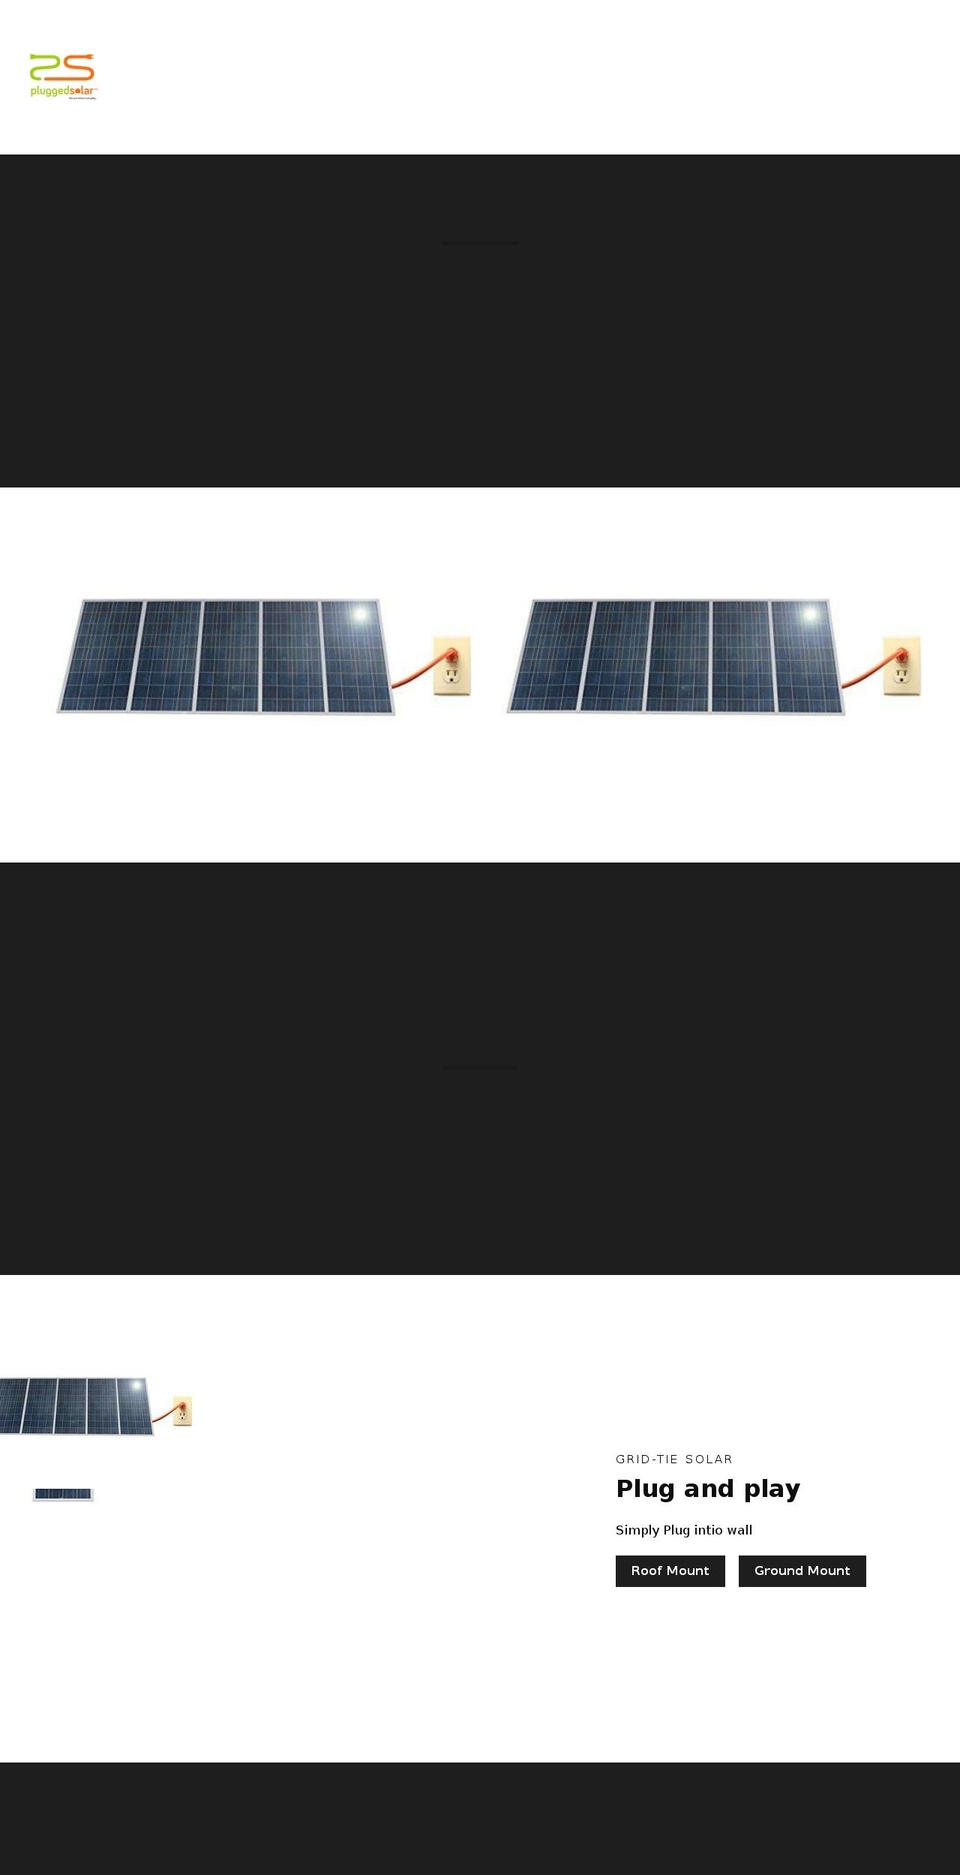 toyota.solar shopify website screenshot